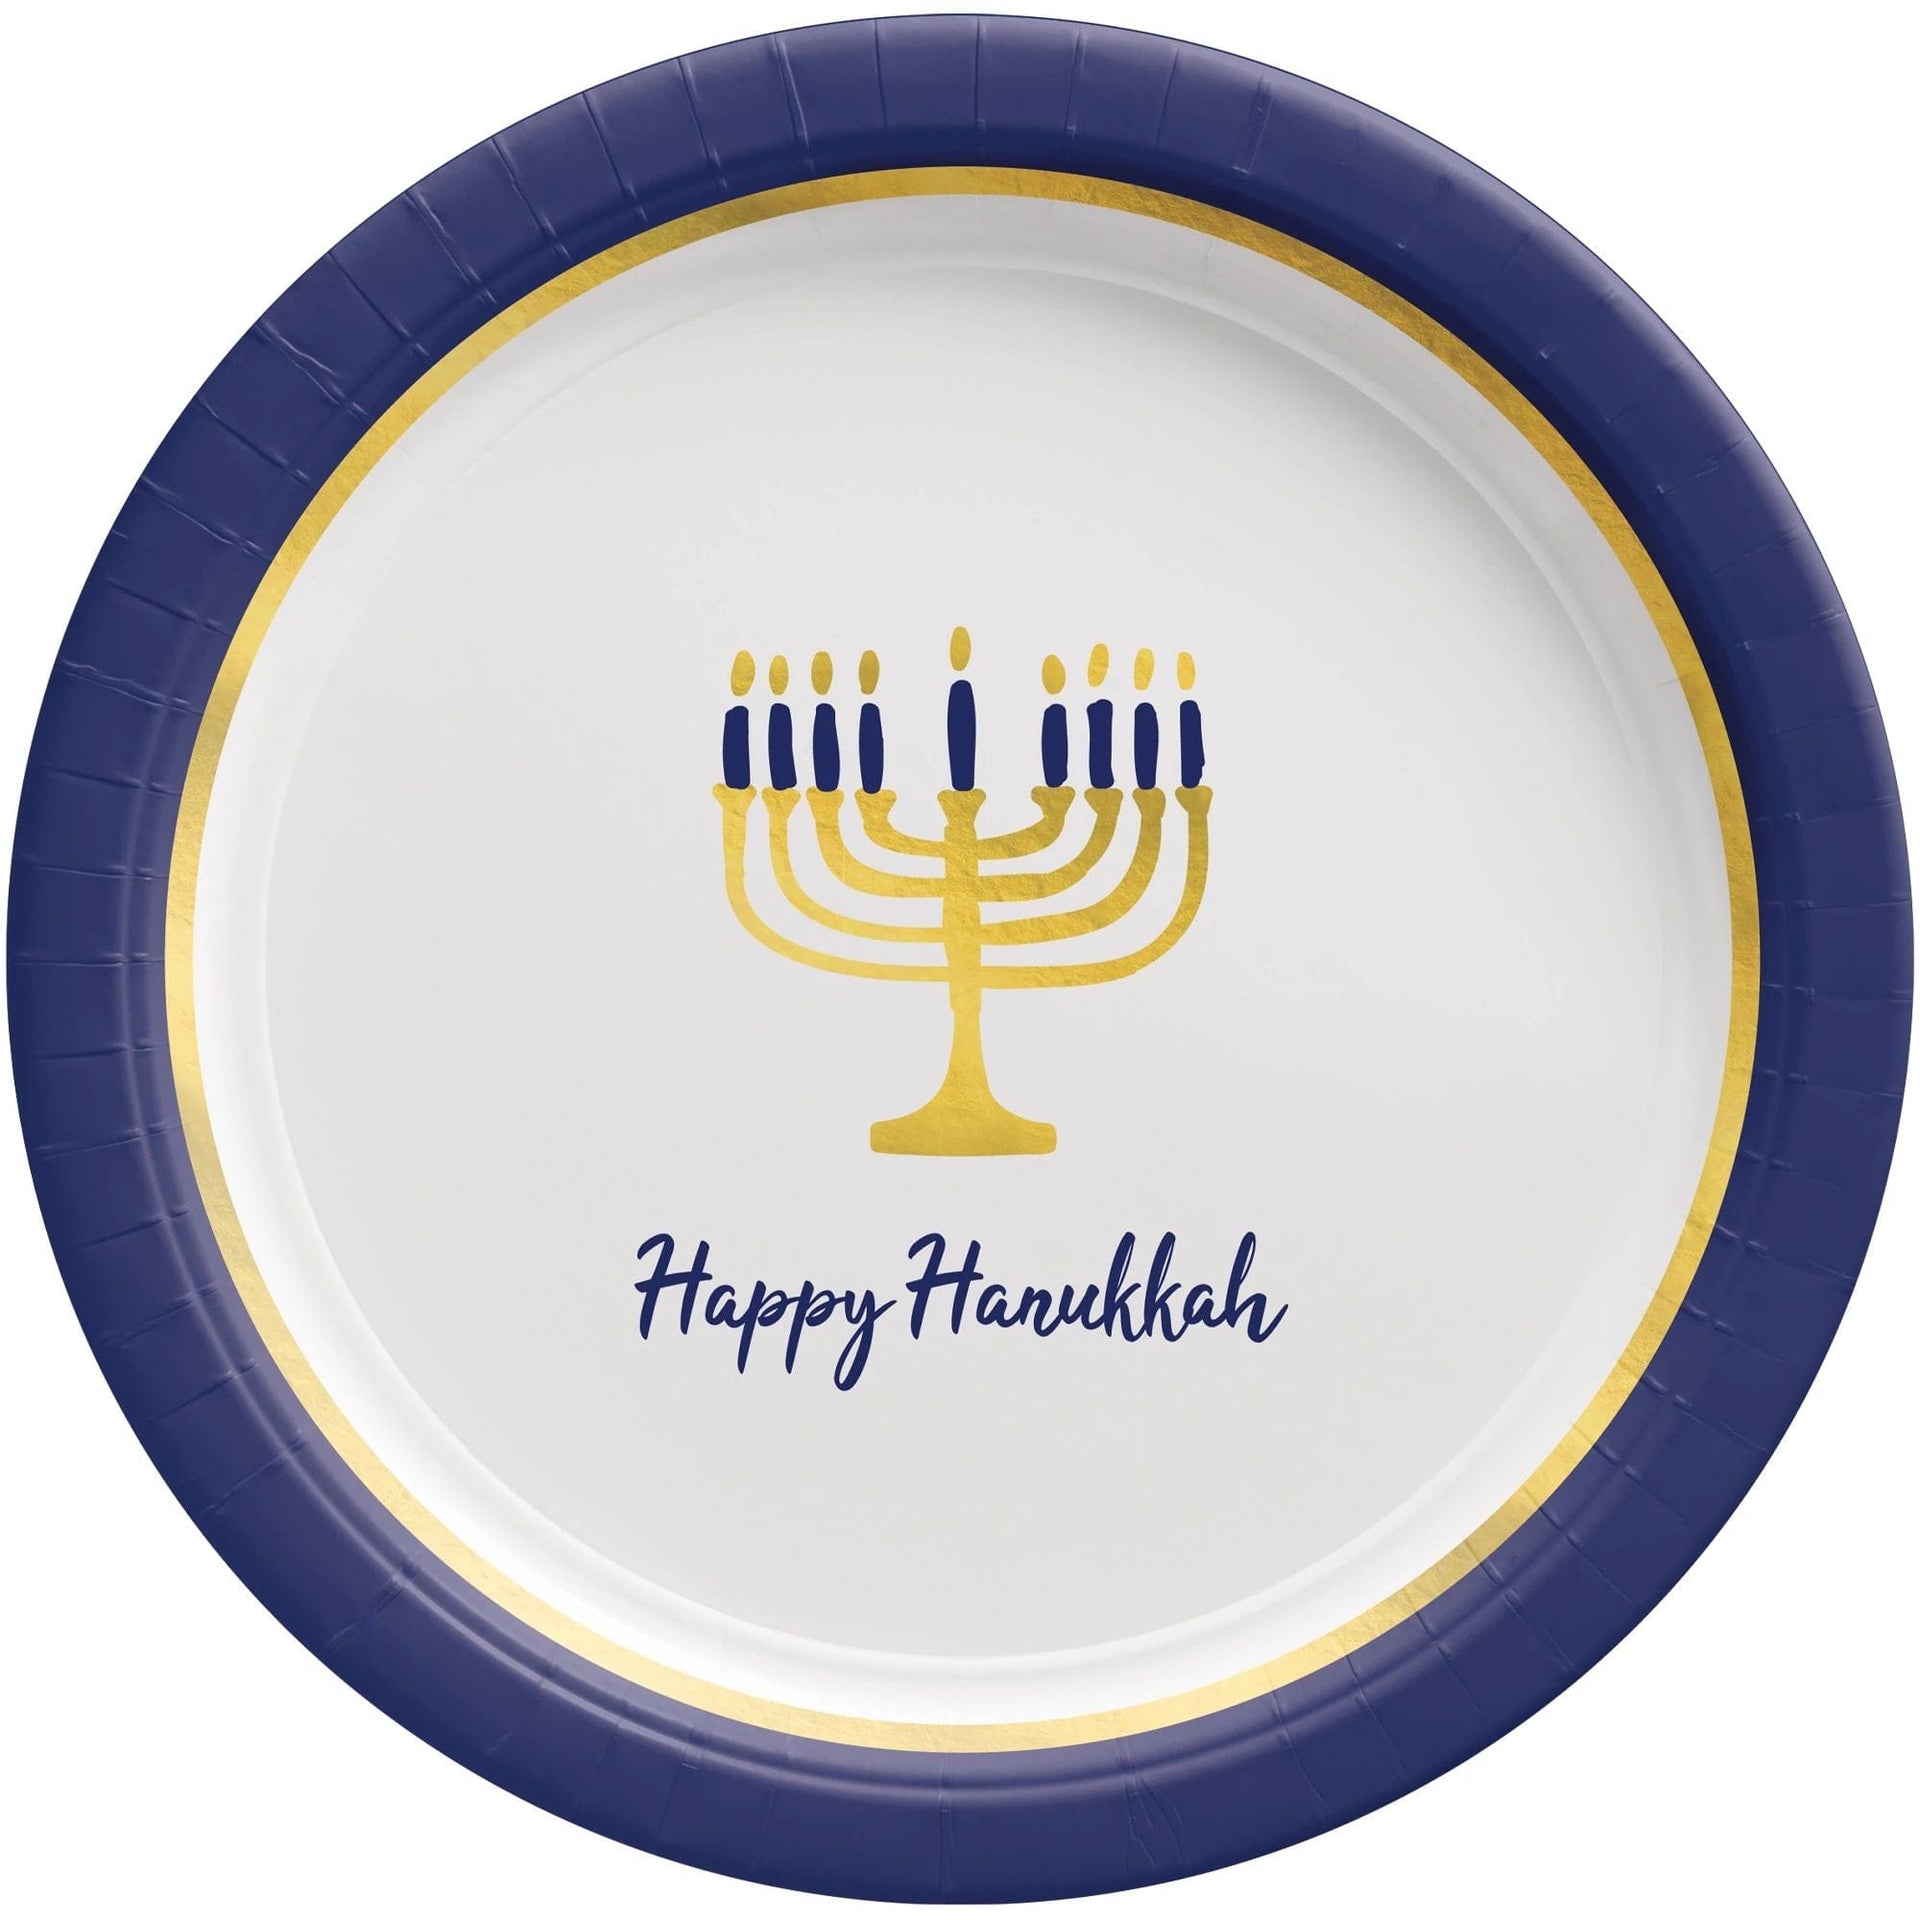 Amscan Plate Happy Hanukkah Round Paper Plates